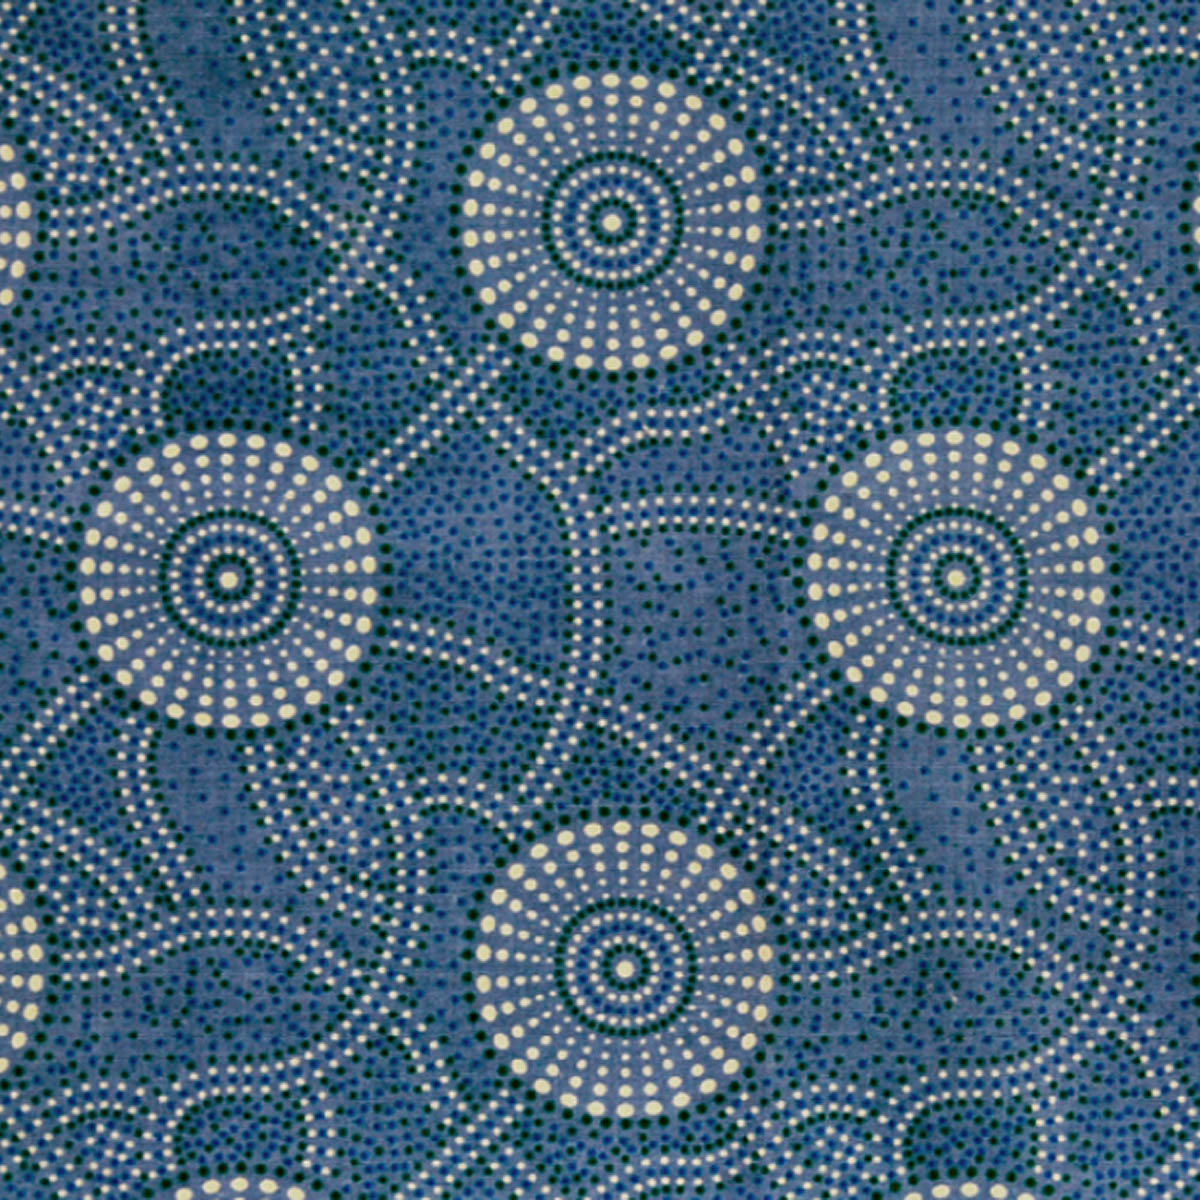 KANGAROO PATH BLUE by Aboriginal Artist ROSEANNE MORTON